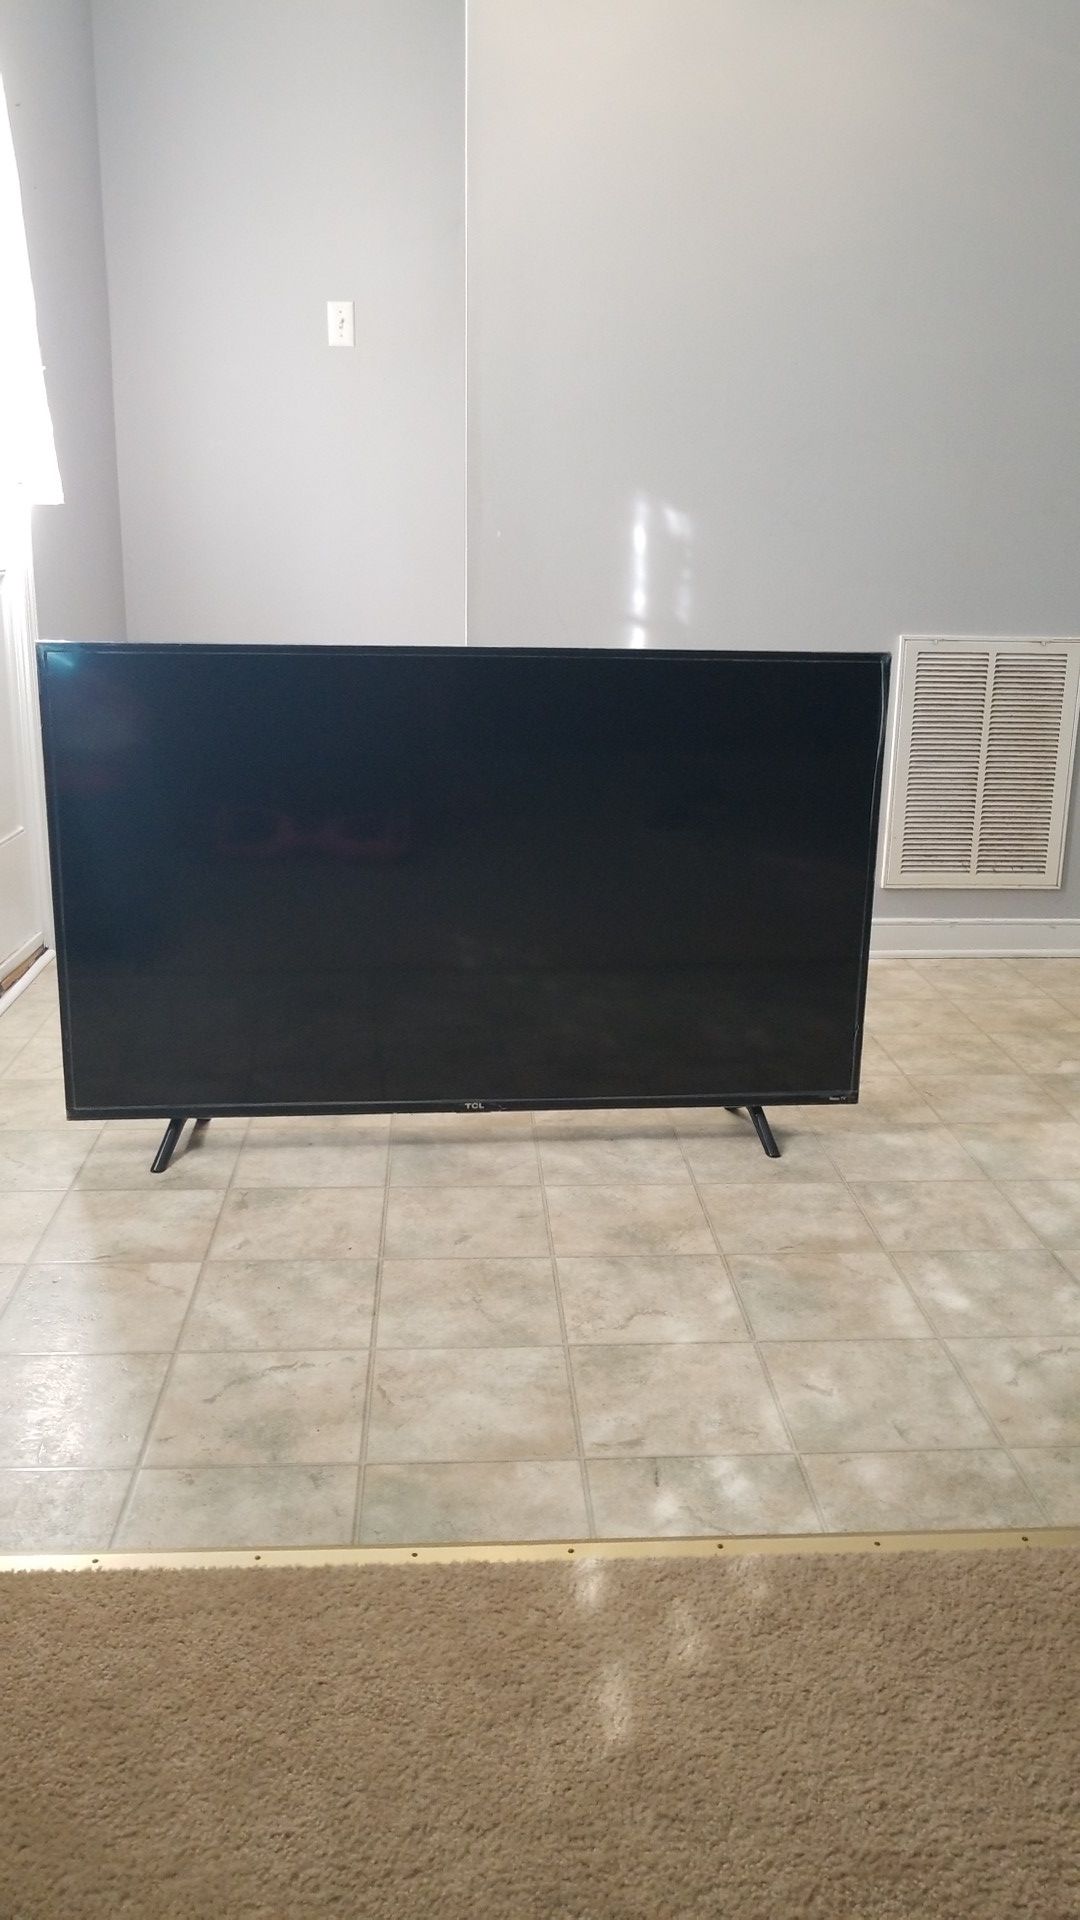 TLC Roku flat screen tv(in wrapping still) 55 inch